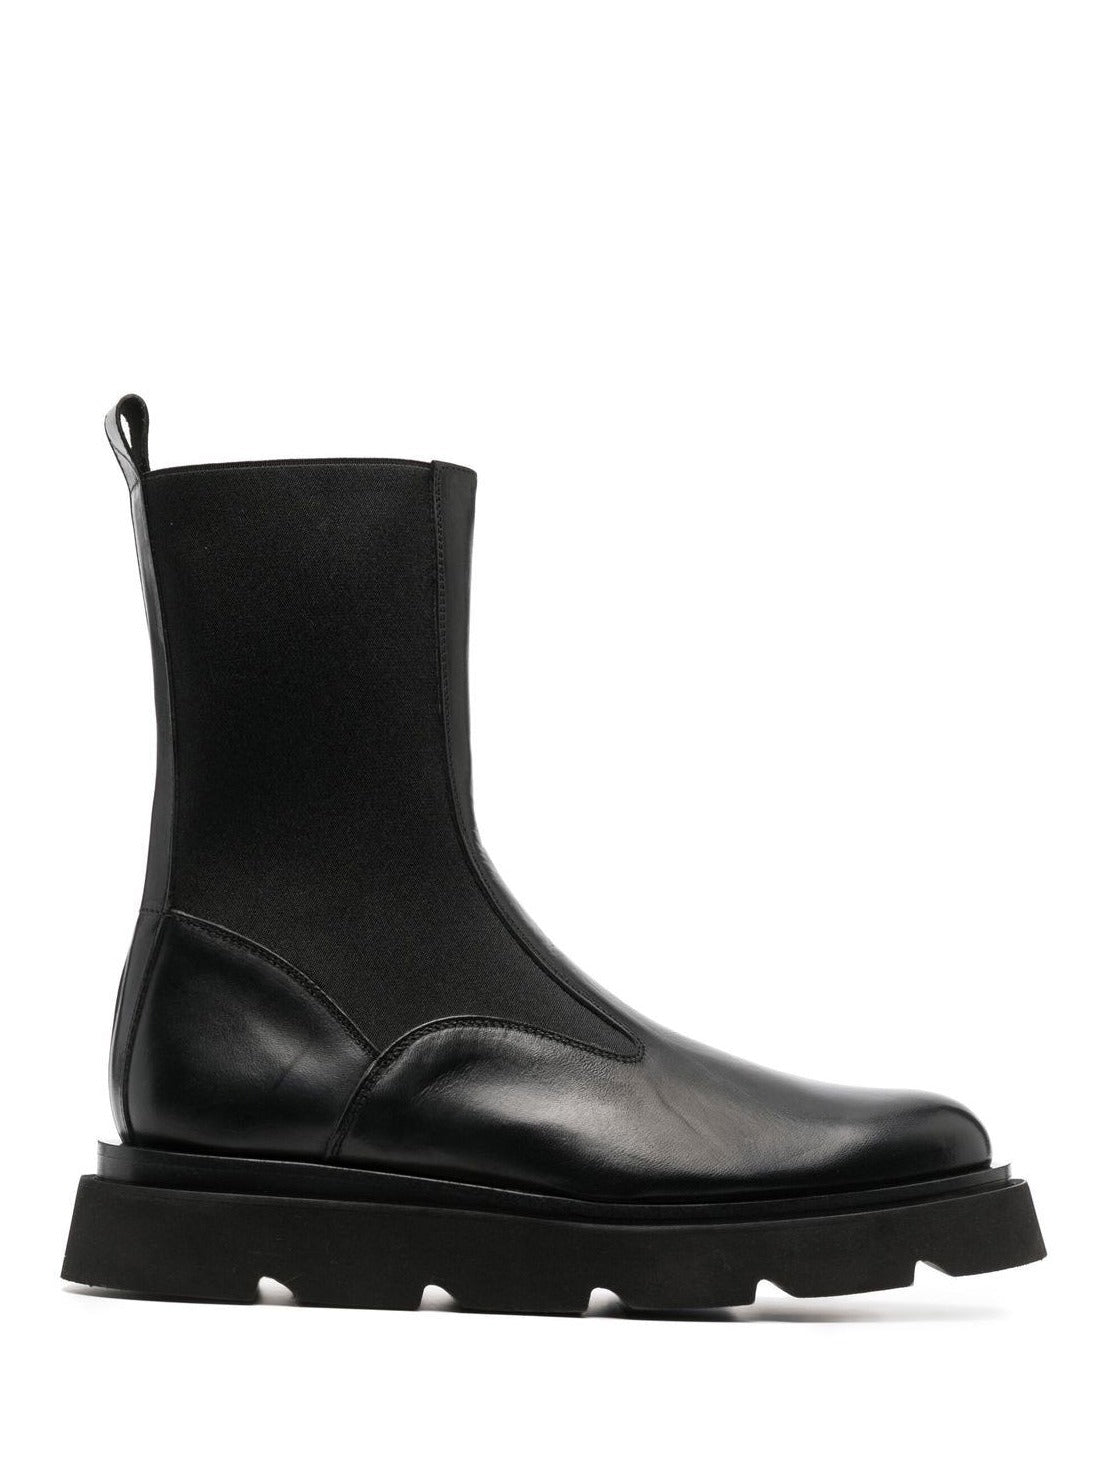 Moncalieri chunky boots, black